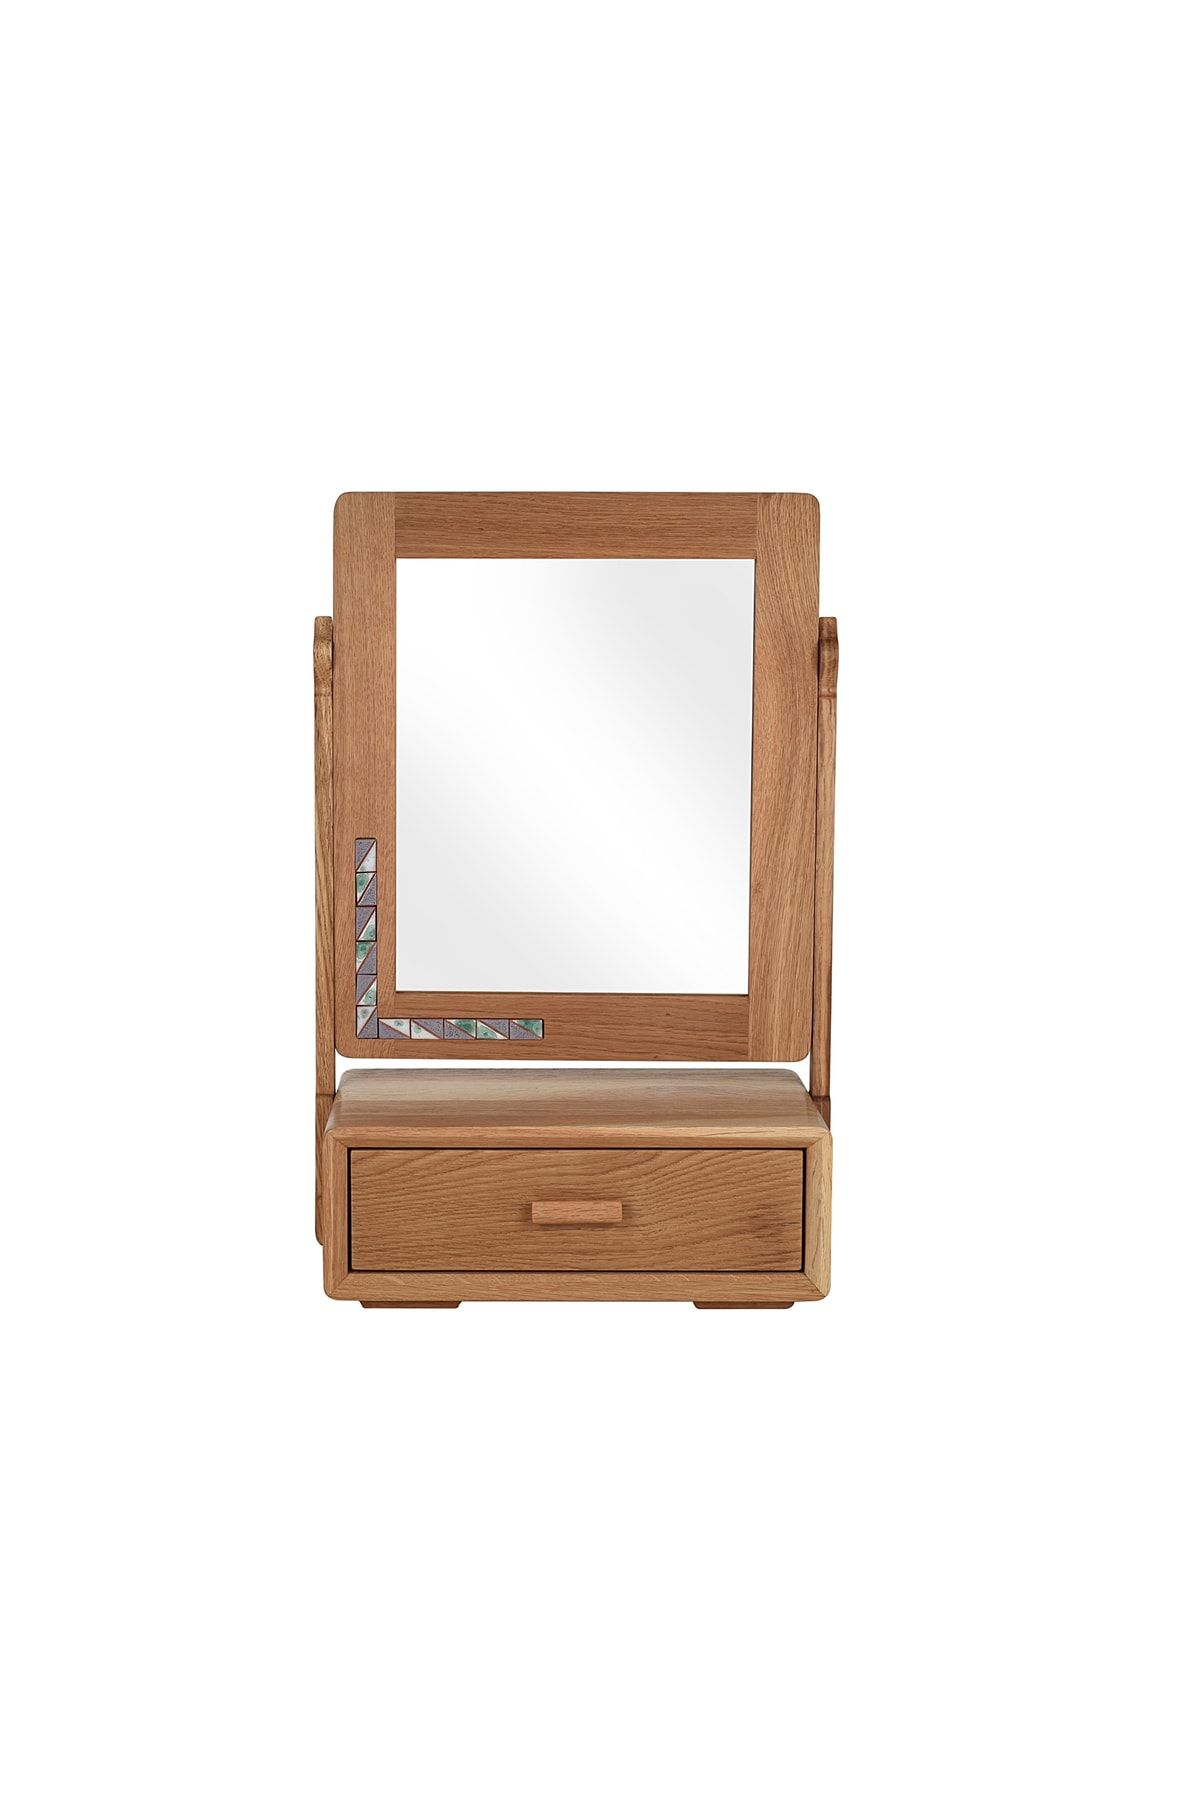 GUGAR WOOD Meşe Ahşap Çekmeceli Ayna Aydolap - Tasarım Çekmeceli Ahşap Ayna- Dekoratif Ayna